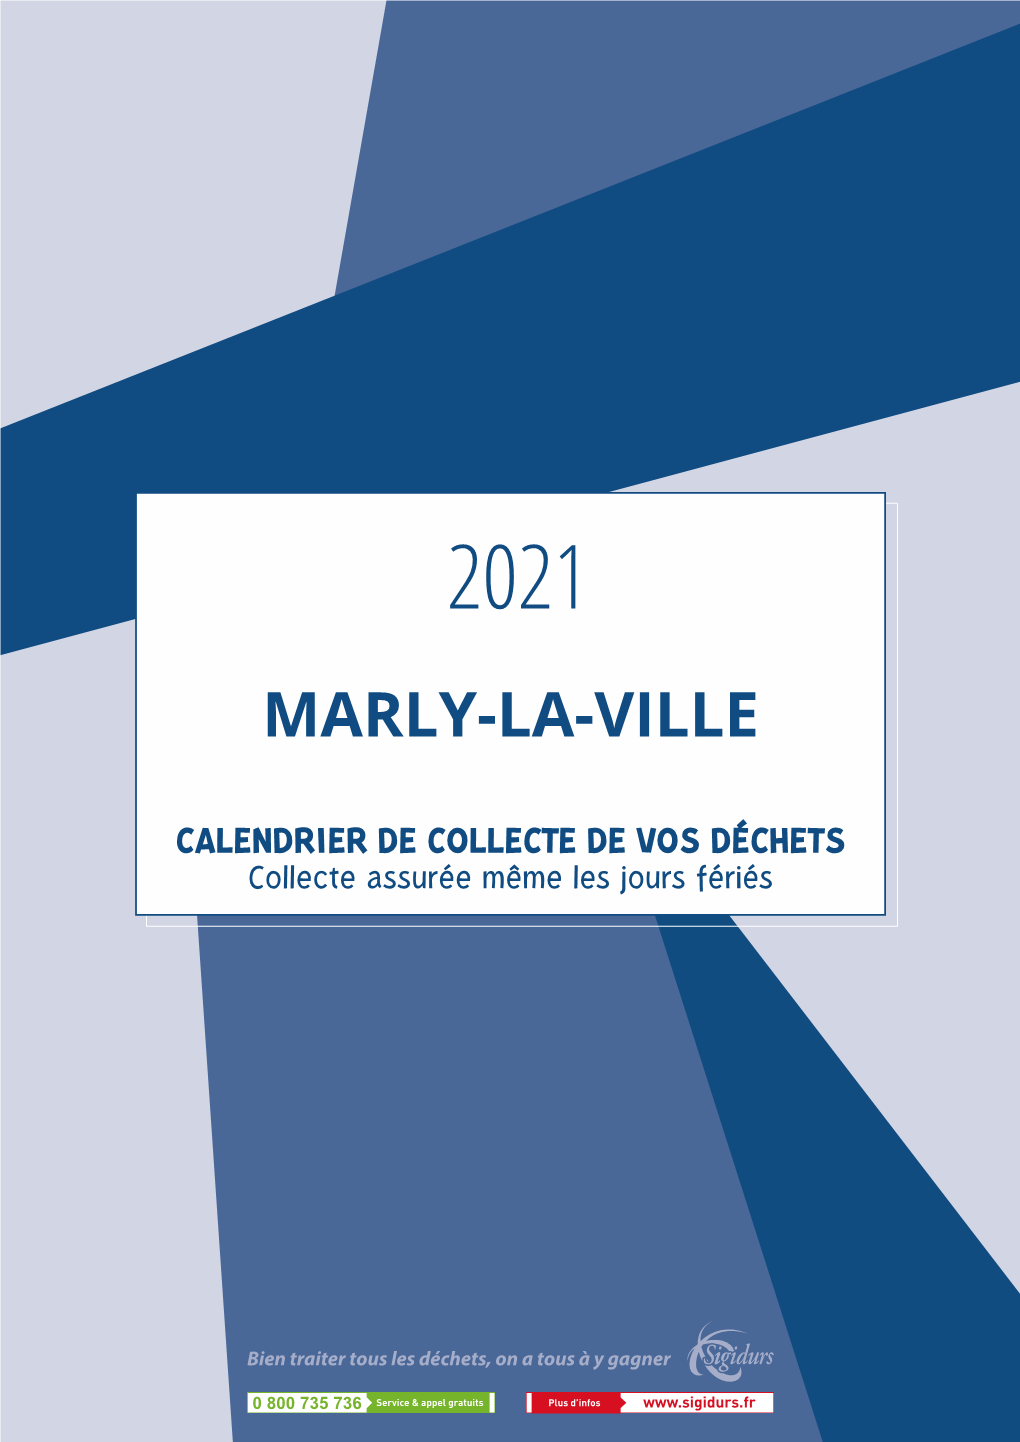 Marly-La-Ville